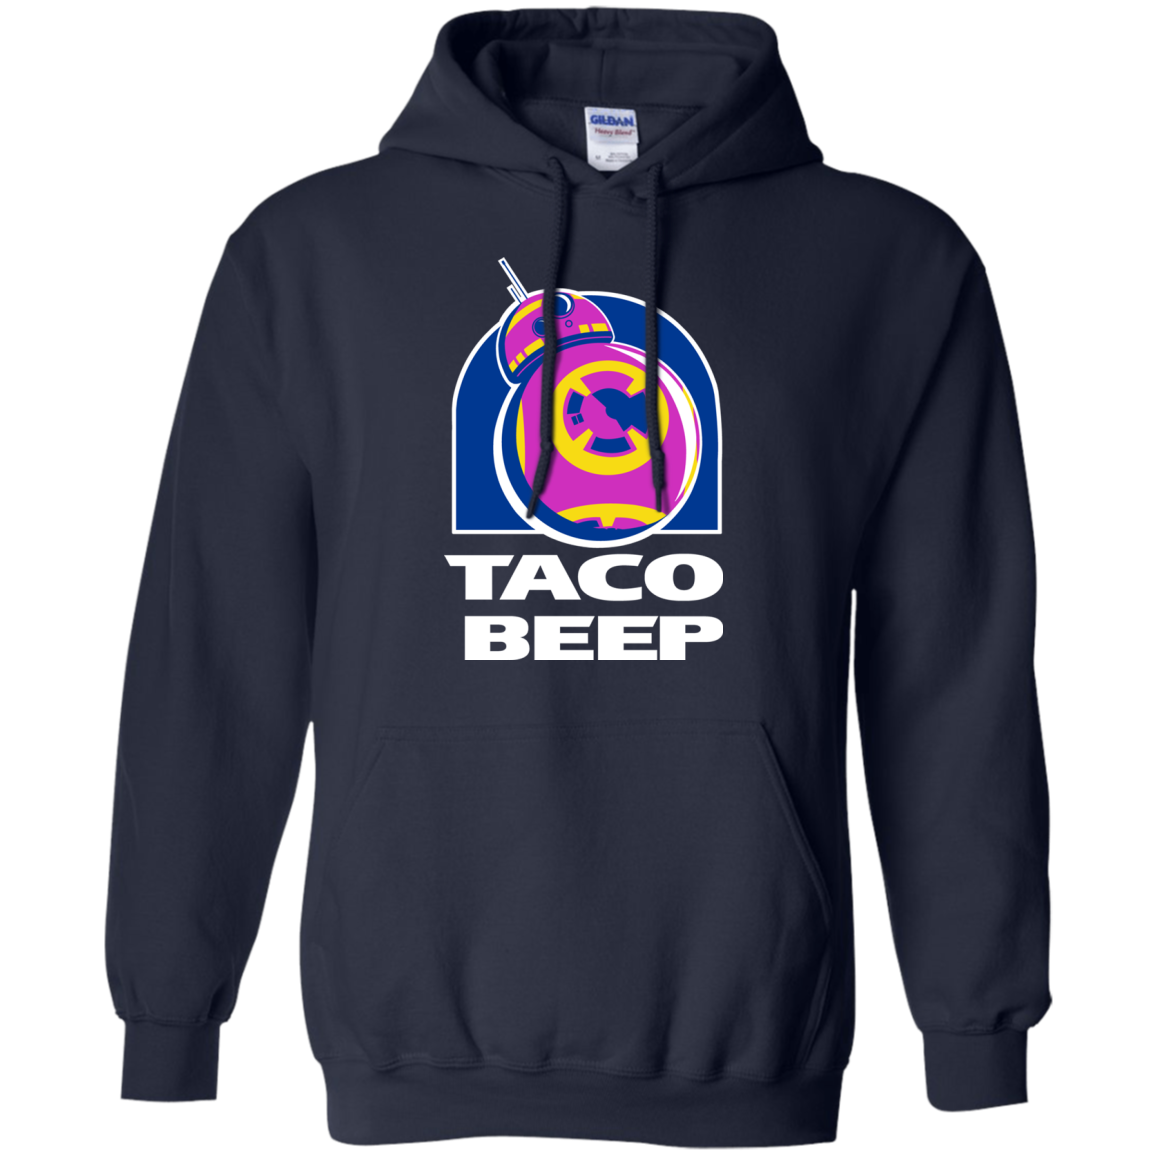 Taco Beep Pullover Hoodie